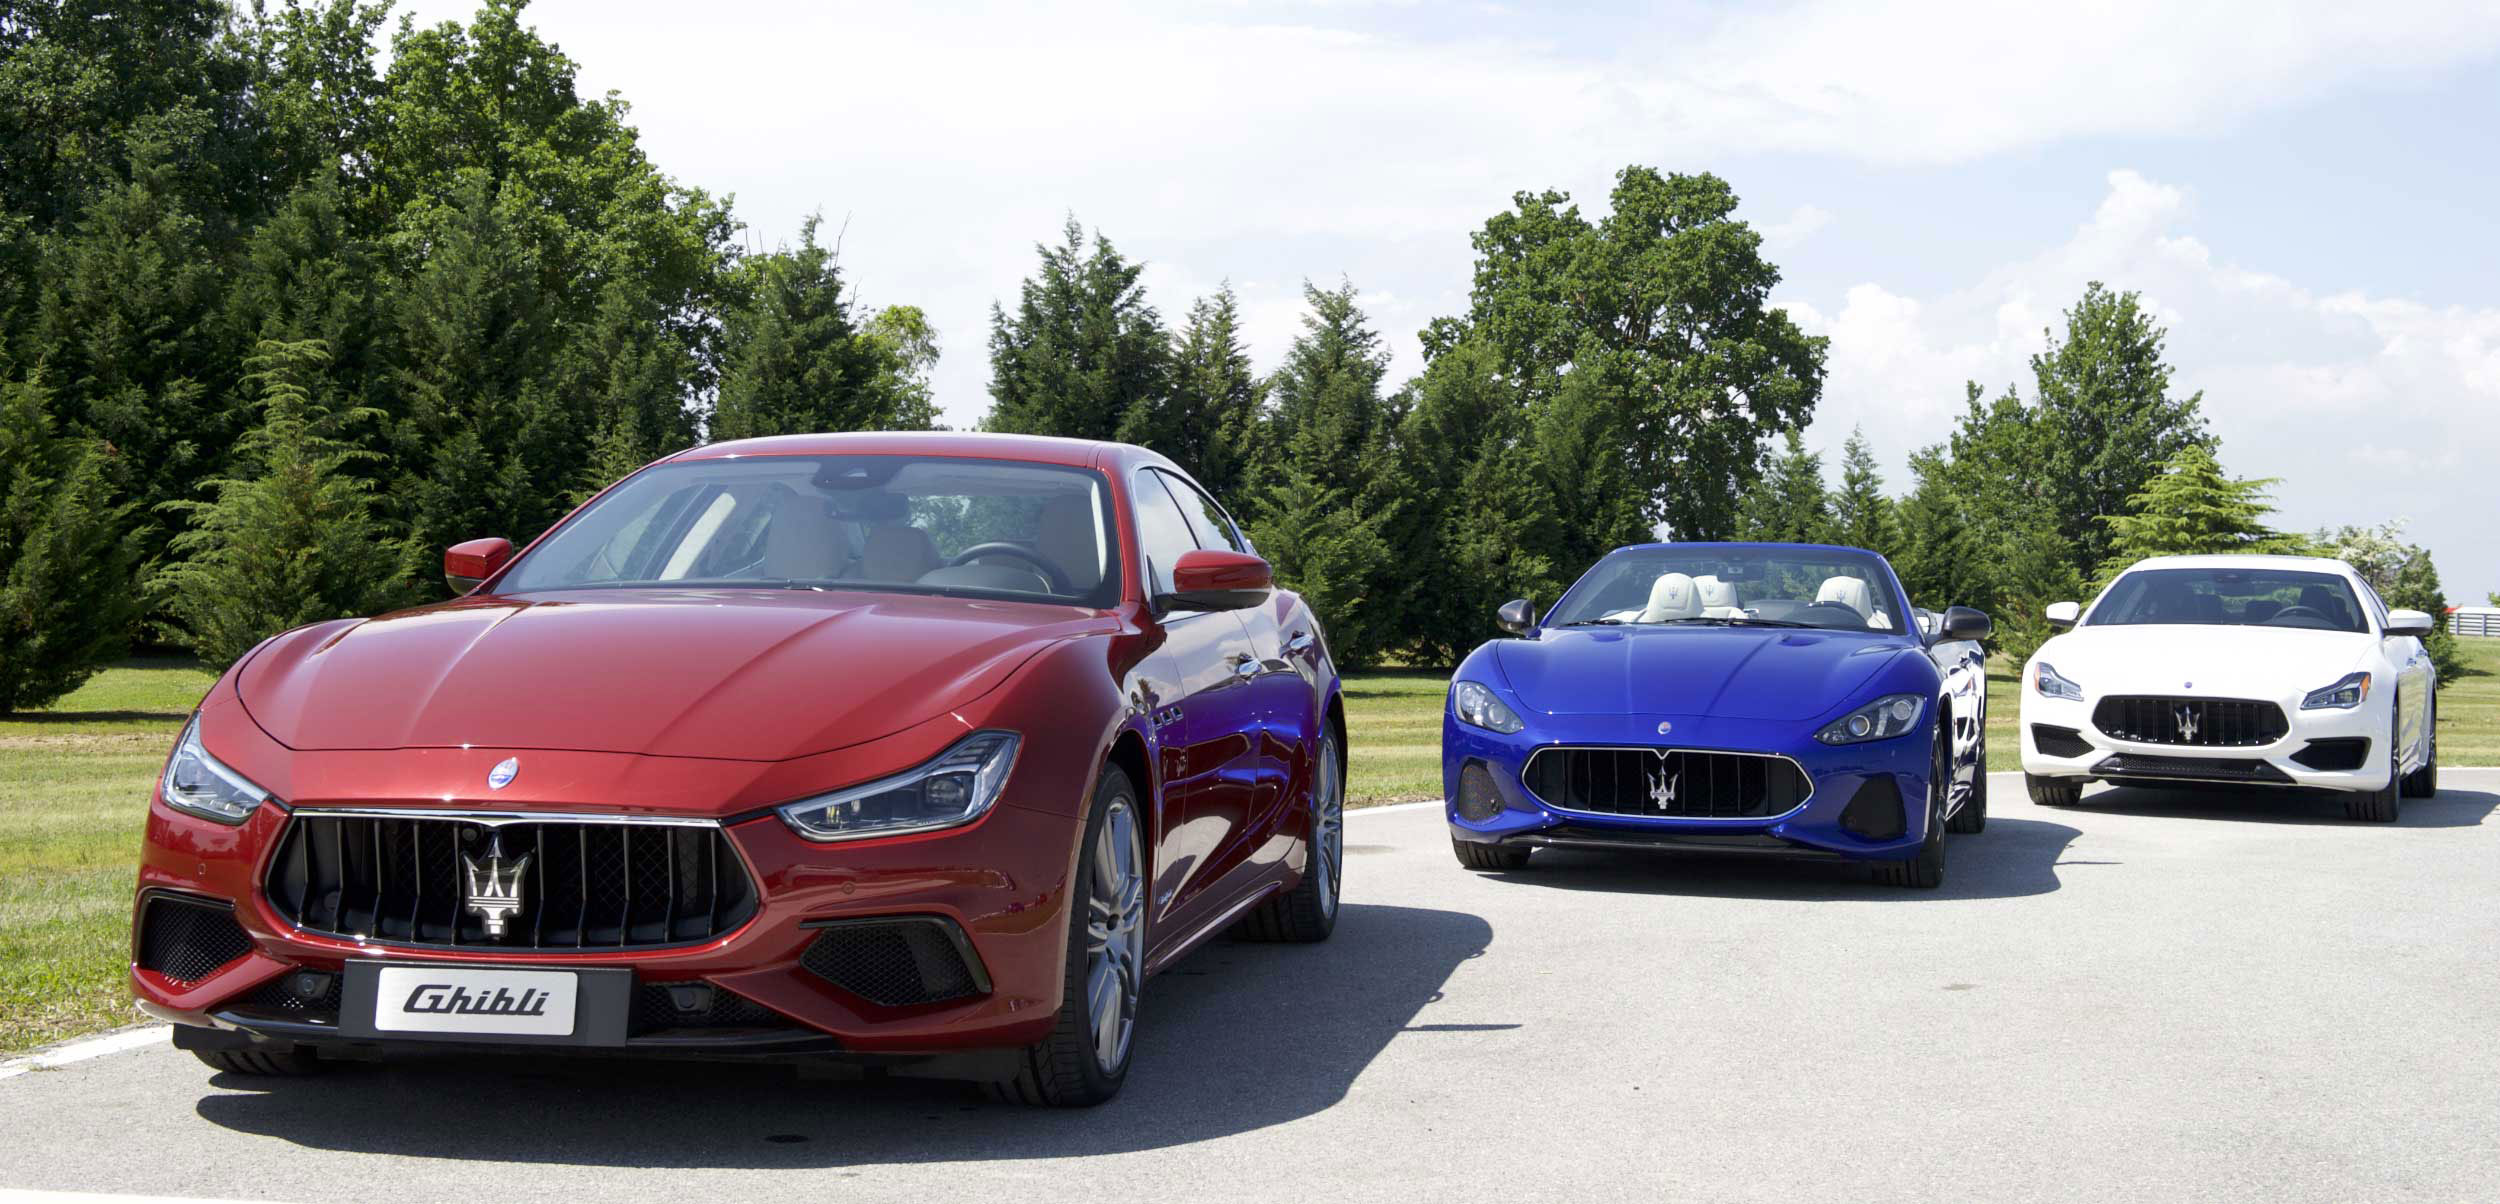 Photo of three parked Maserati